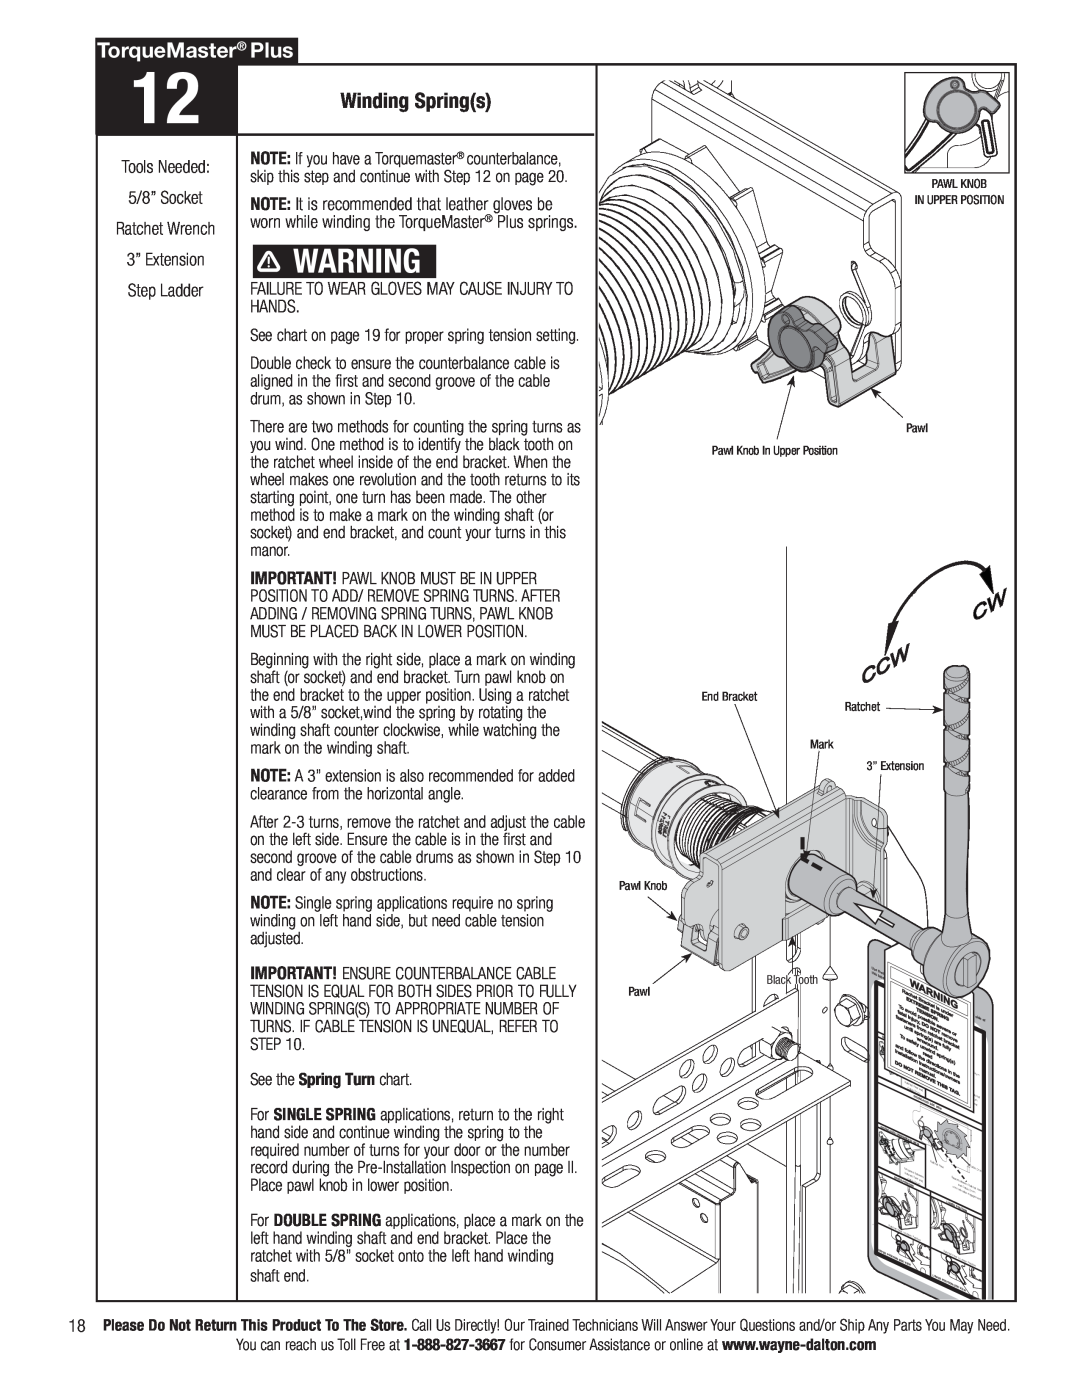 Wayne-Dalton 3790-Z installation instructions TorqueMaster Plus, Winding Springs 